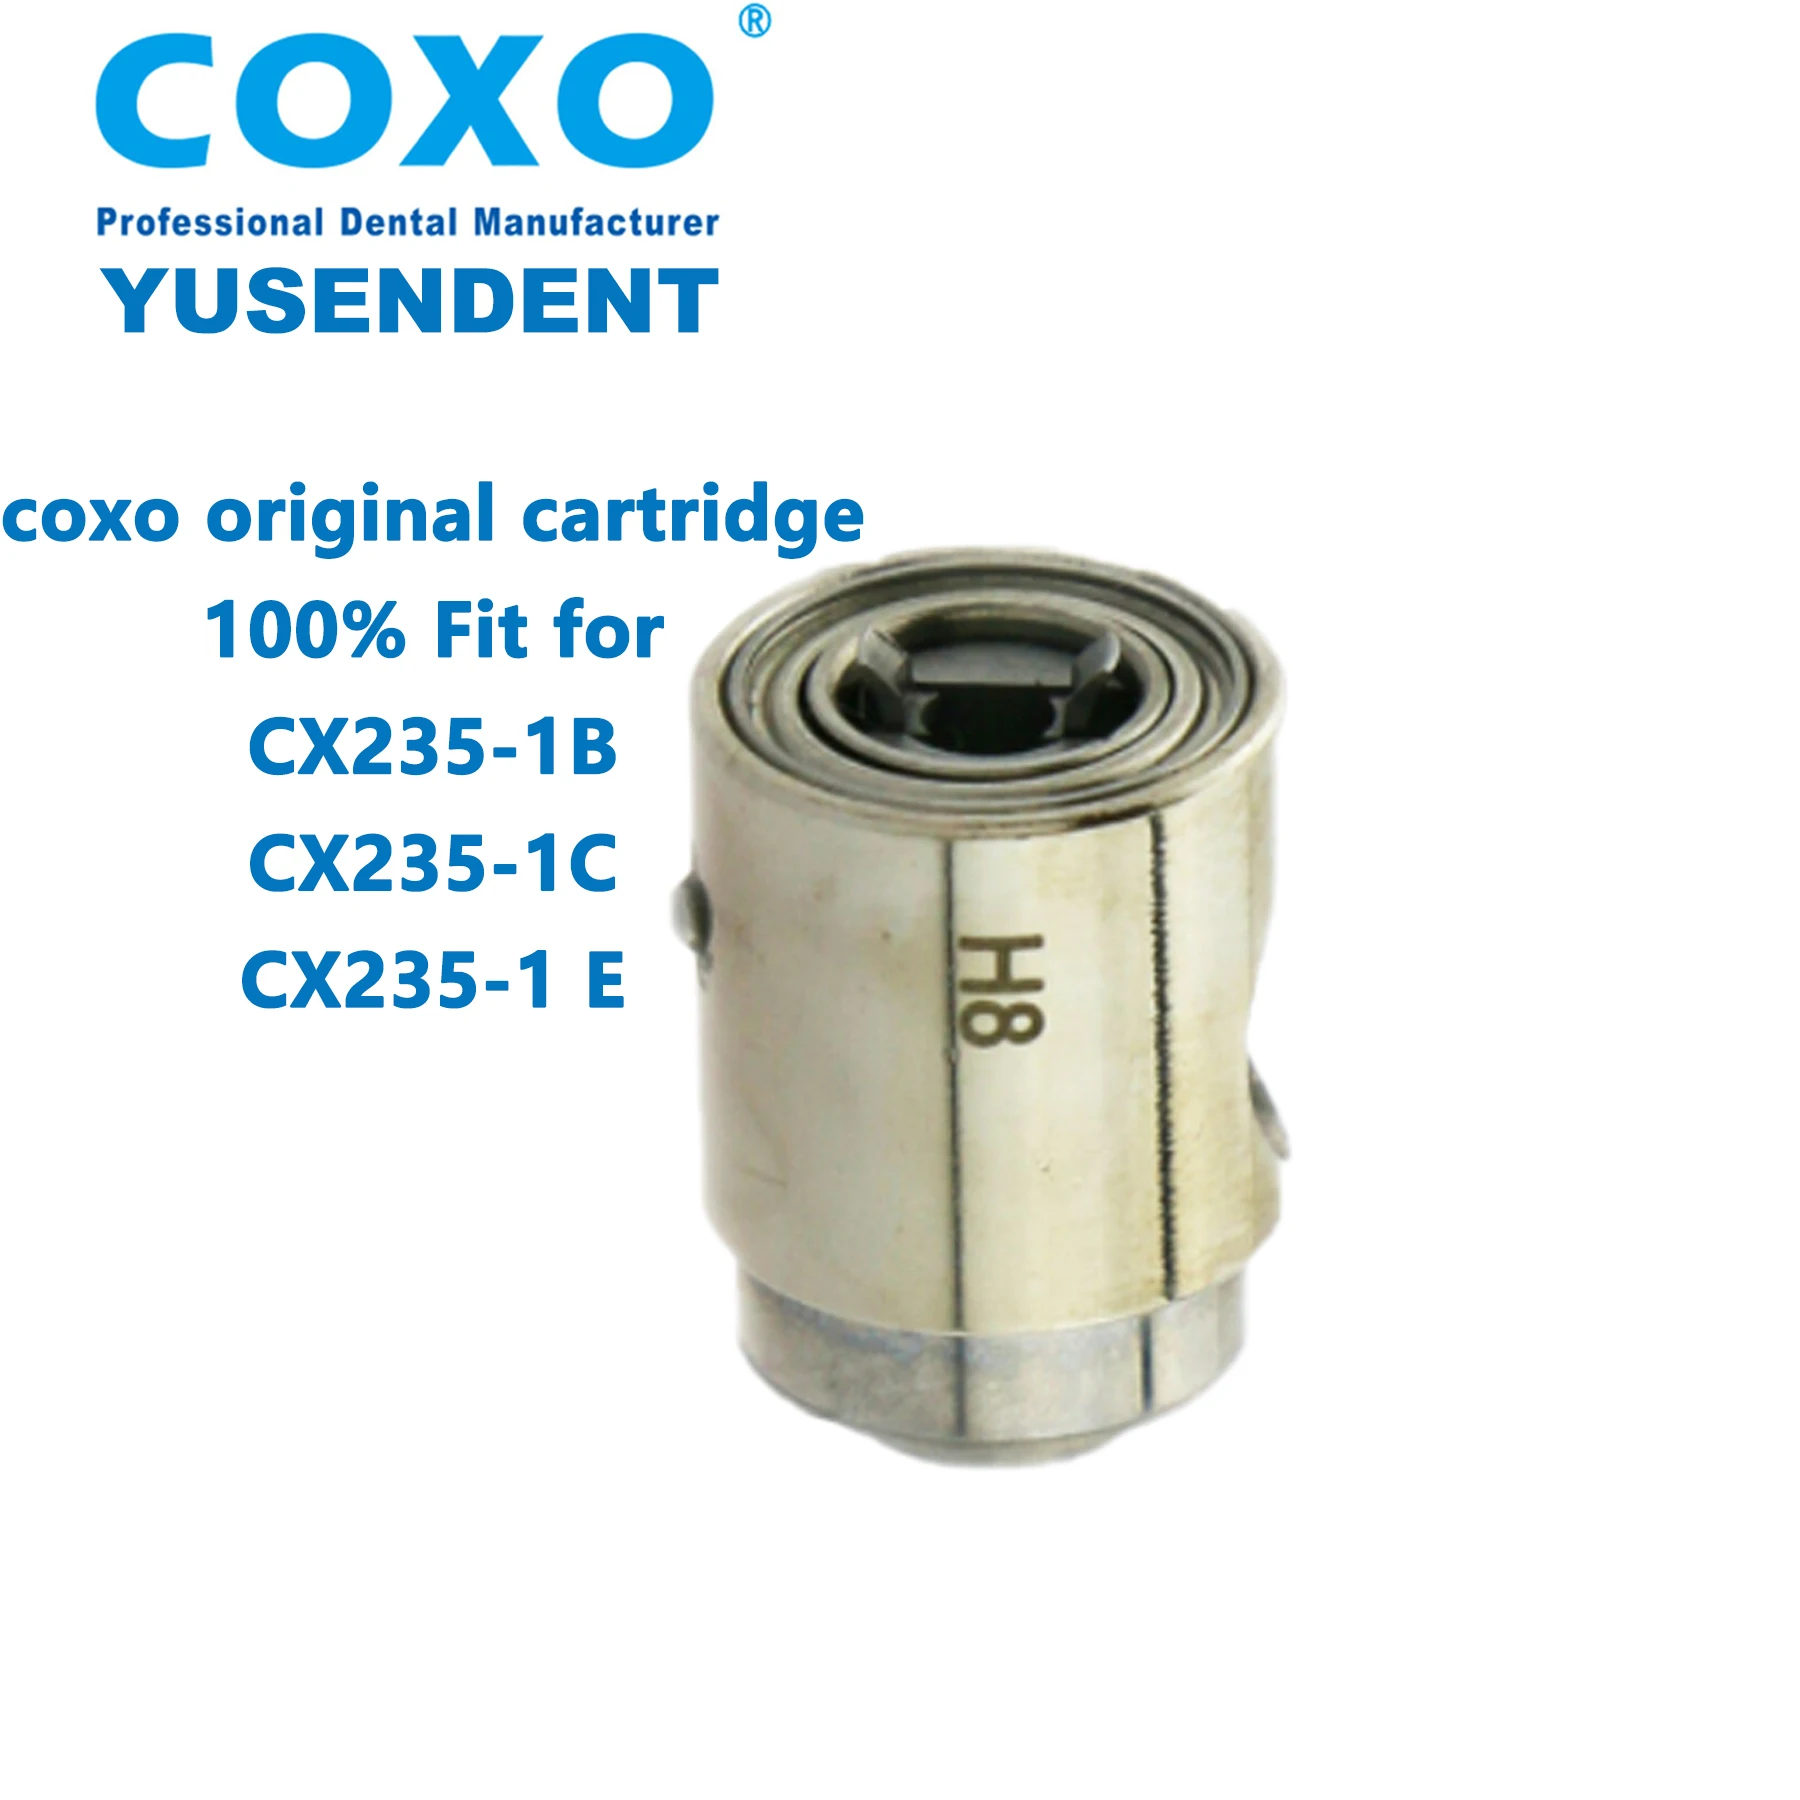 COXO Dental Spare Cartridge LED Fiber Optic Low Speed Ceramic Bearings Fit Contra Angle Turbine Handpiece CX235-1B/1C/1E